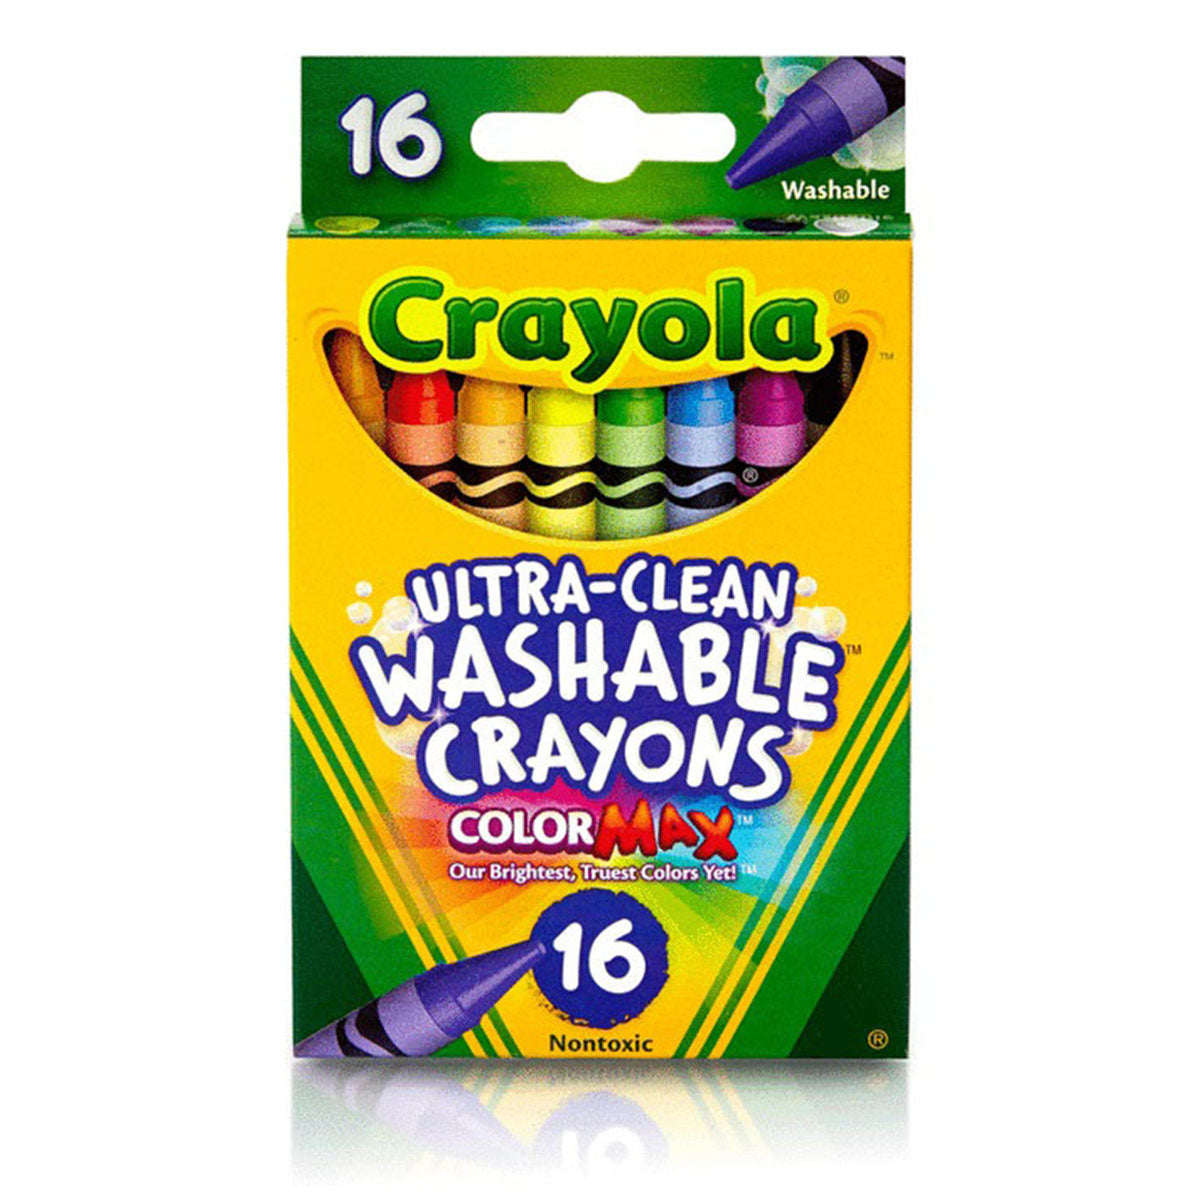 Crayola - Ultra-Clean Washable Crayons 16 Count